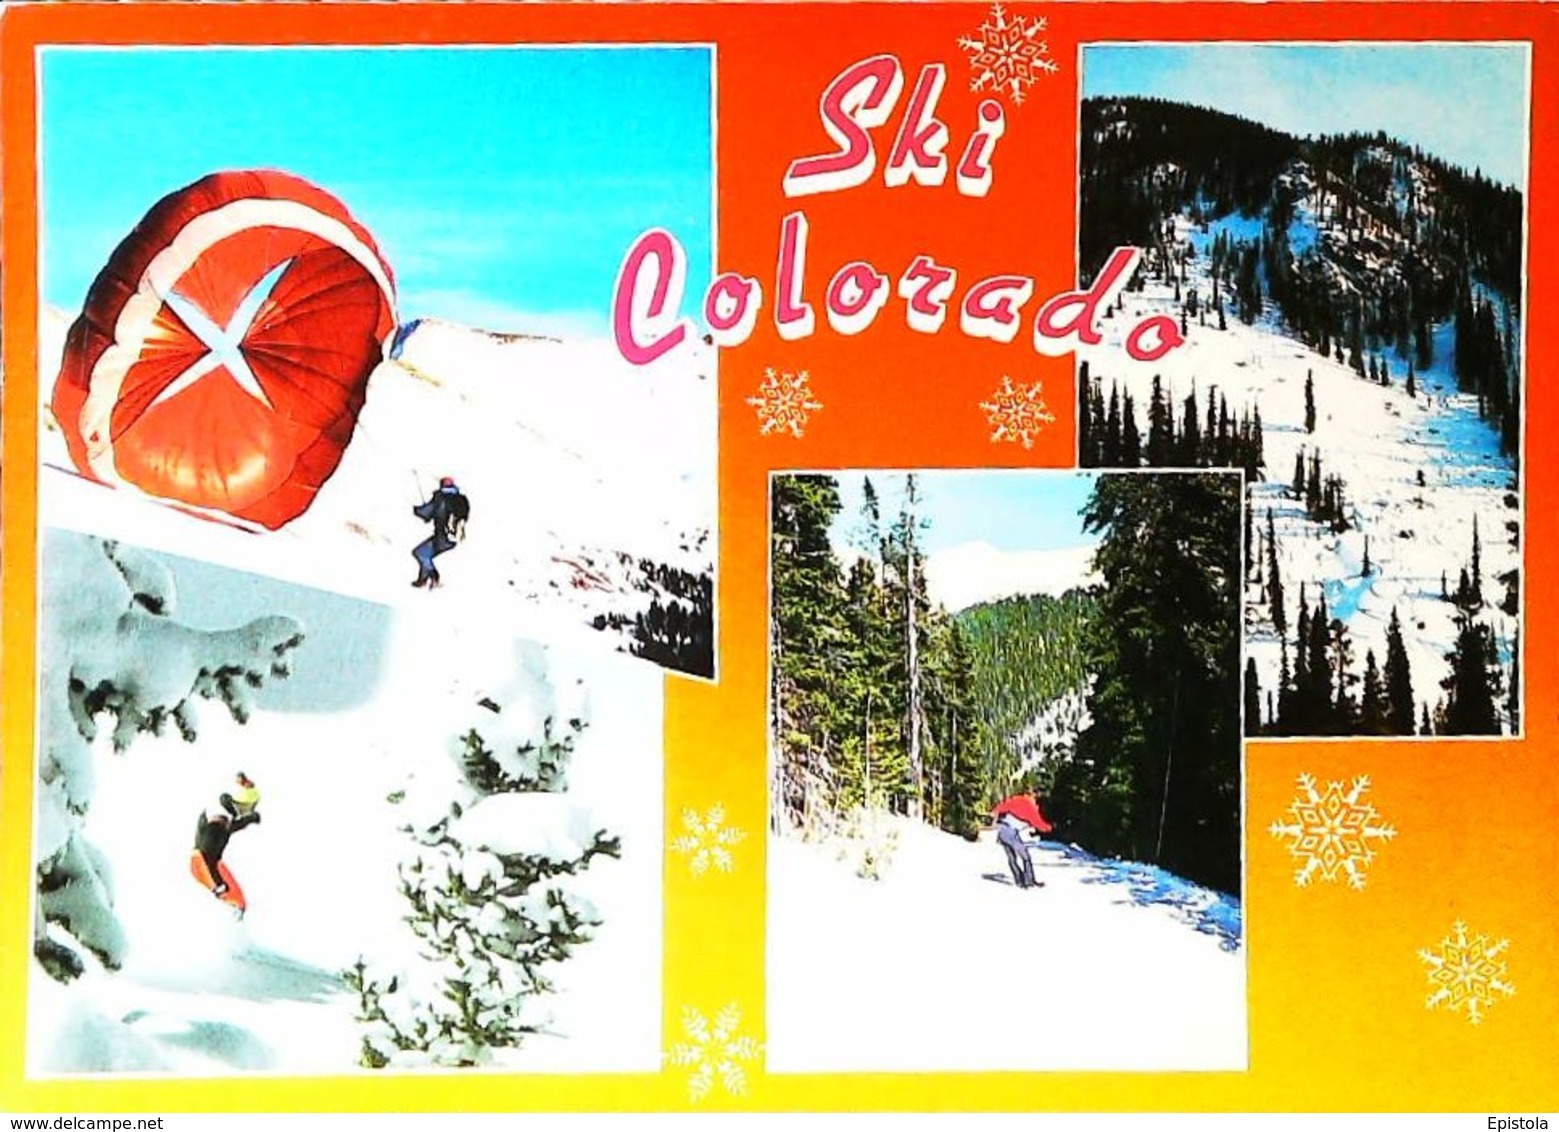 Parachutisme à Ski  "Ski Country & Parachuting" COLORADO -Edt Boulder Co. -  CPM 1980s - Parachutting